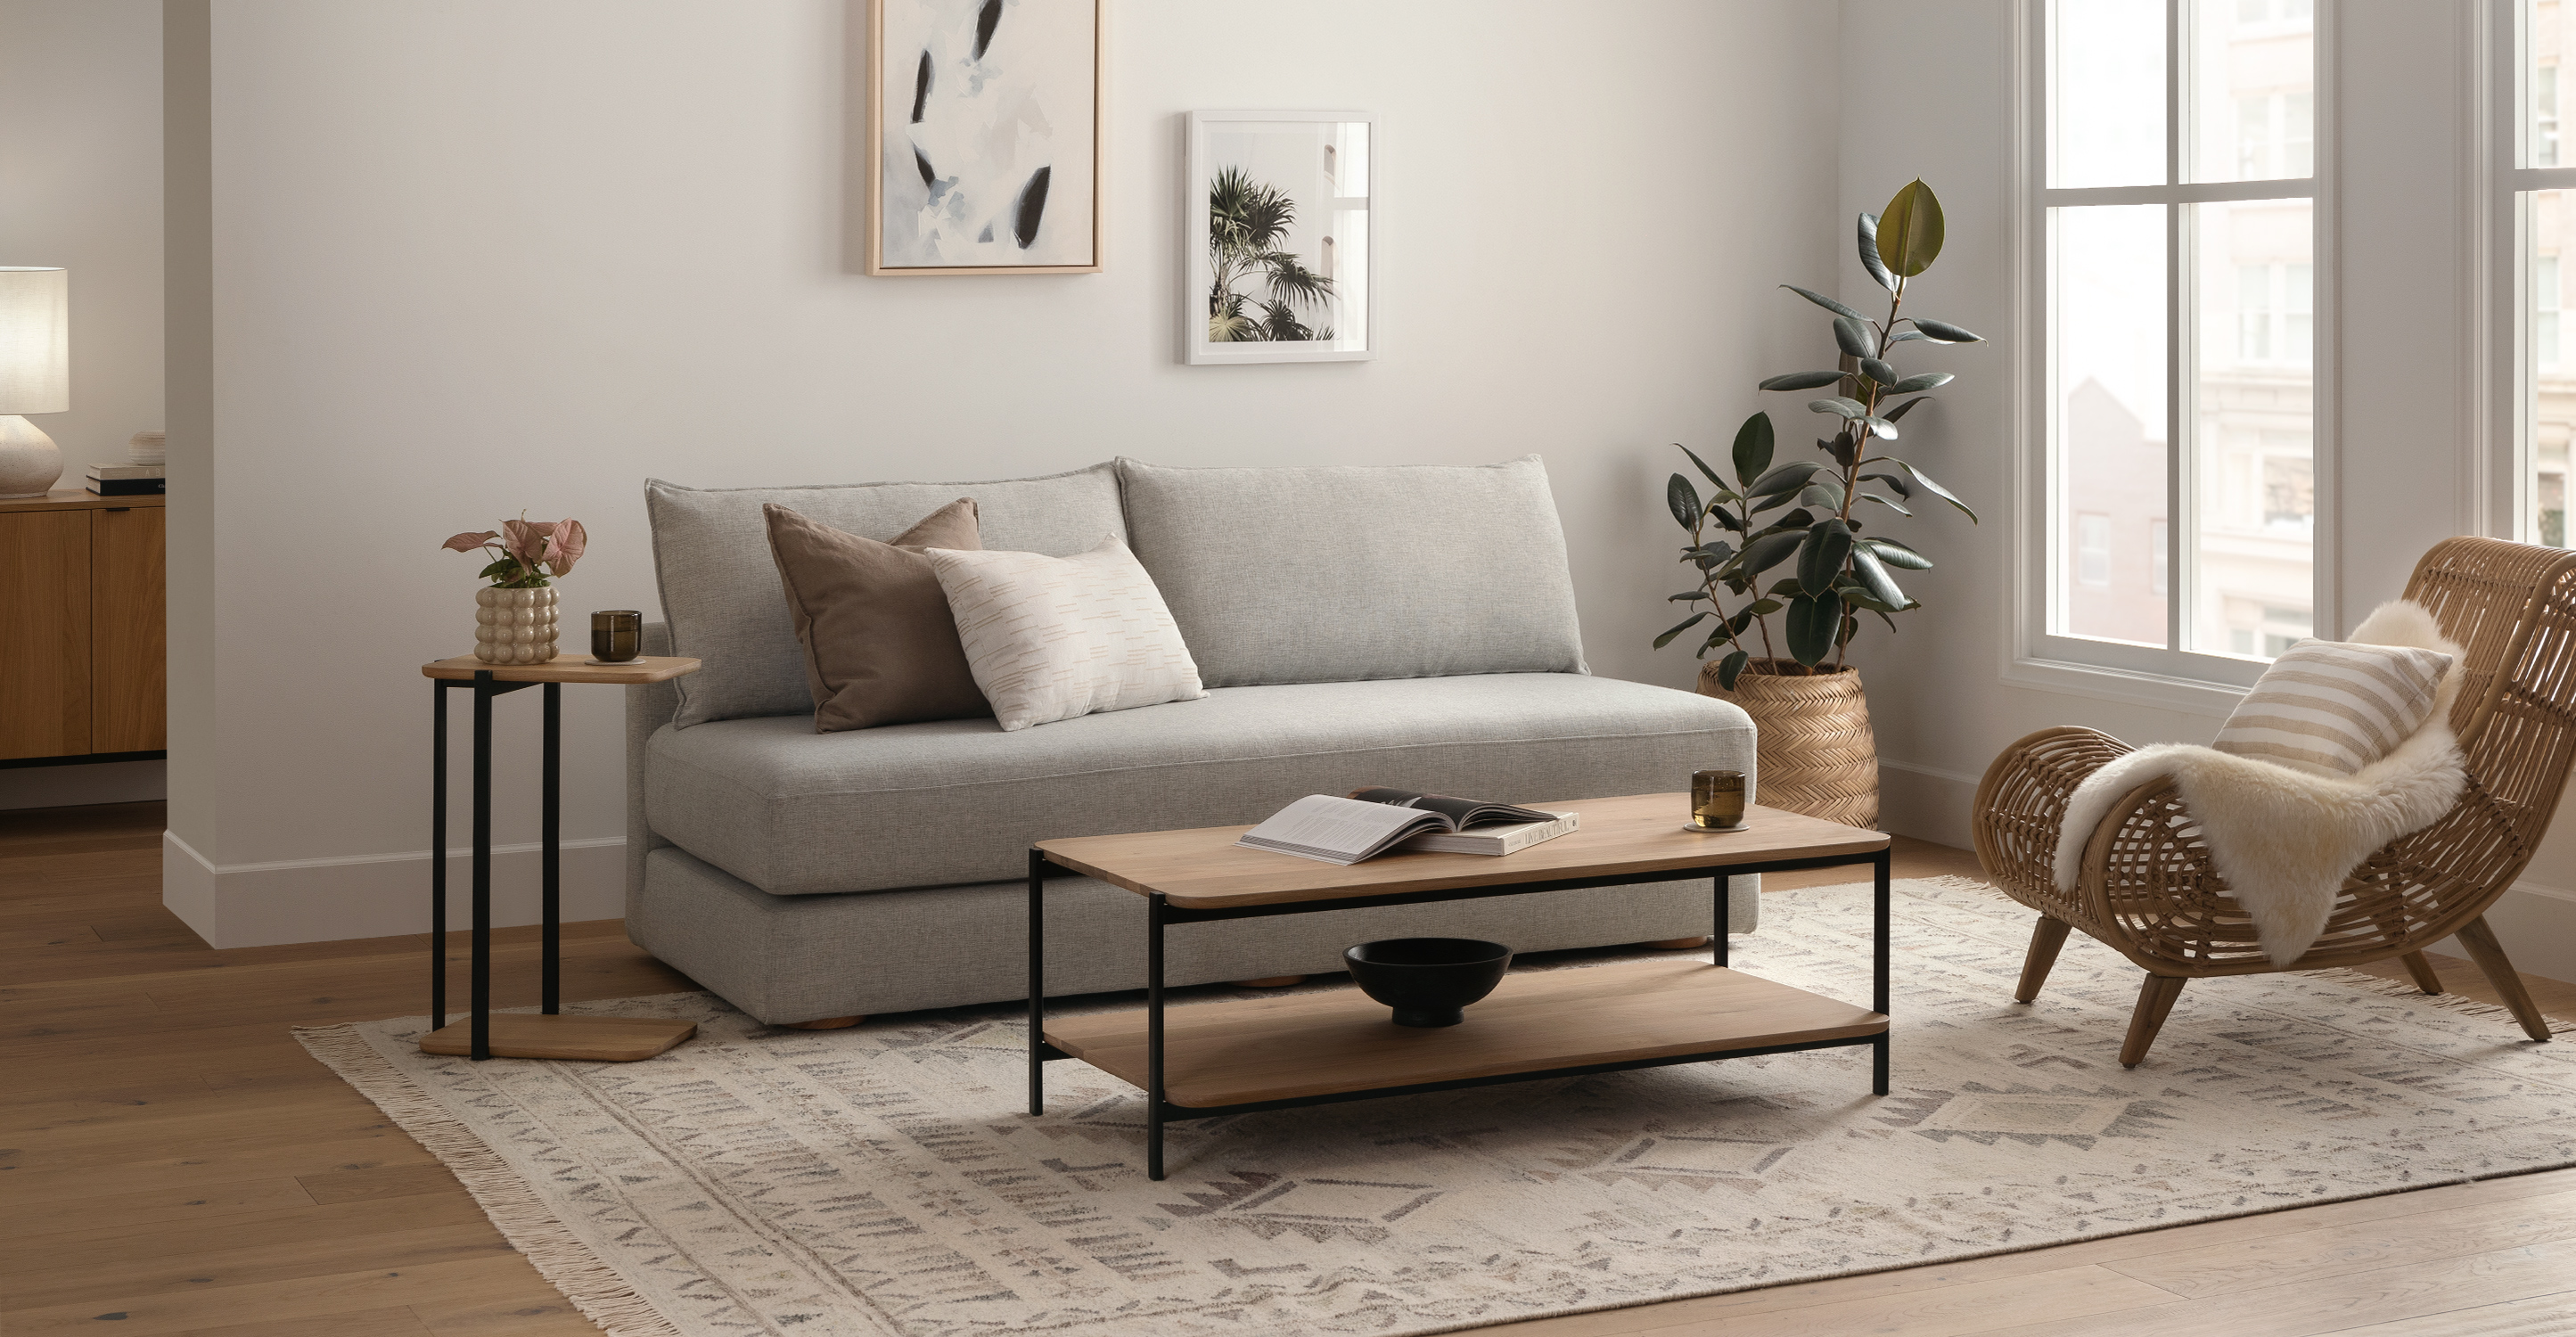 Contemporary Mid Century Modern Sleeper Sofas Sofa Beds Article